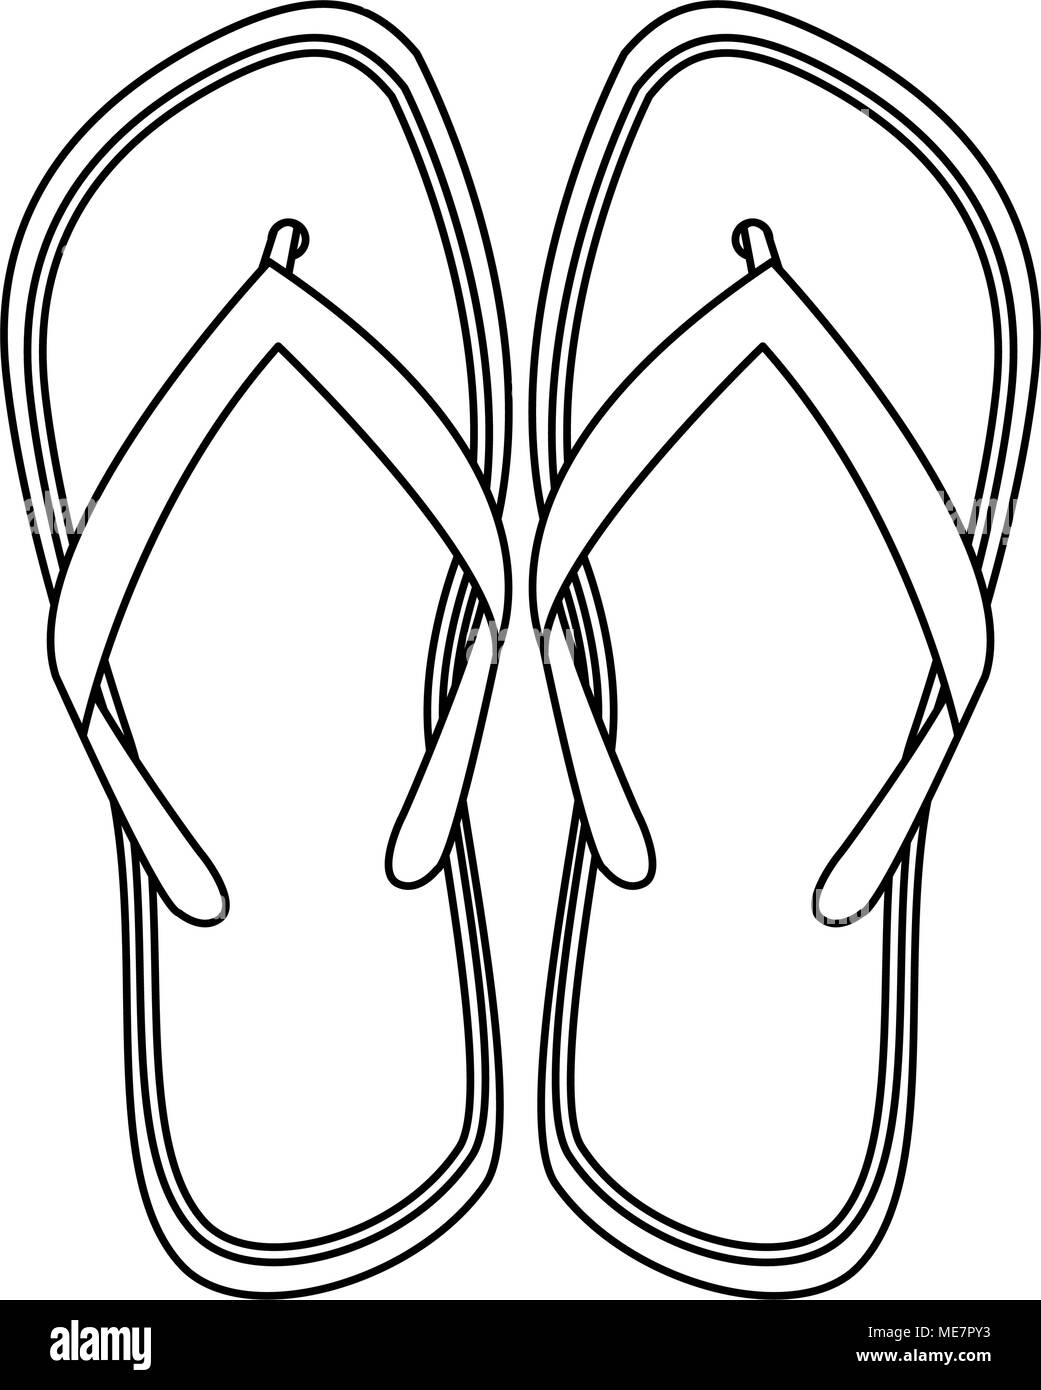 Flip flops sandals on black and white Stock Vector